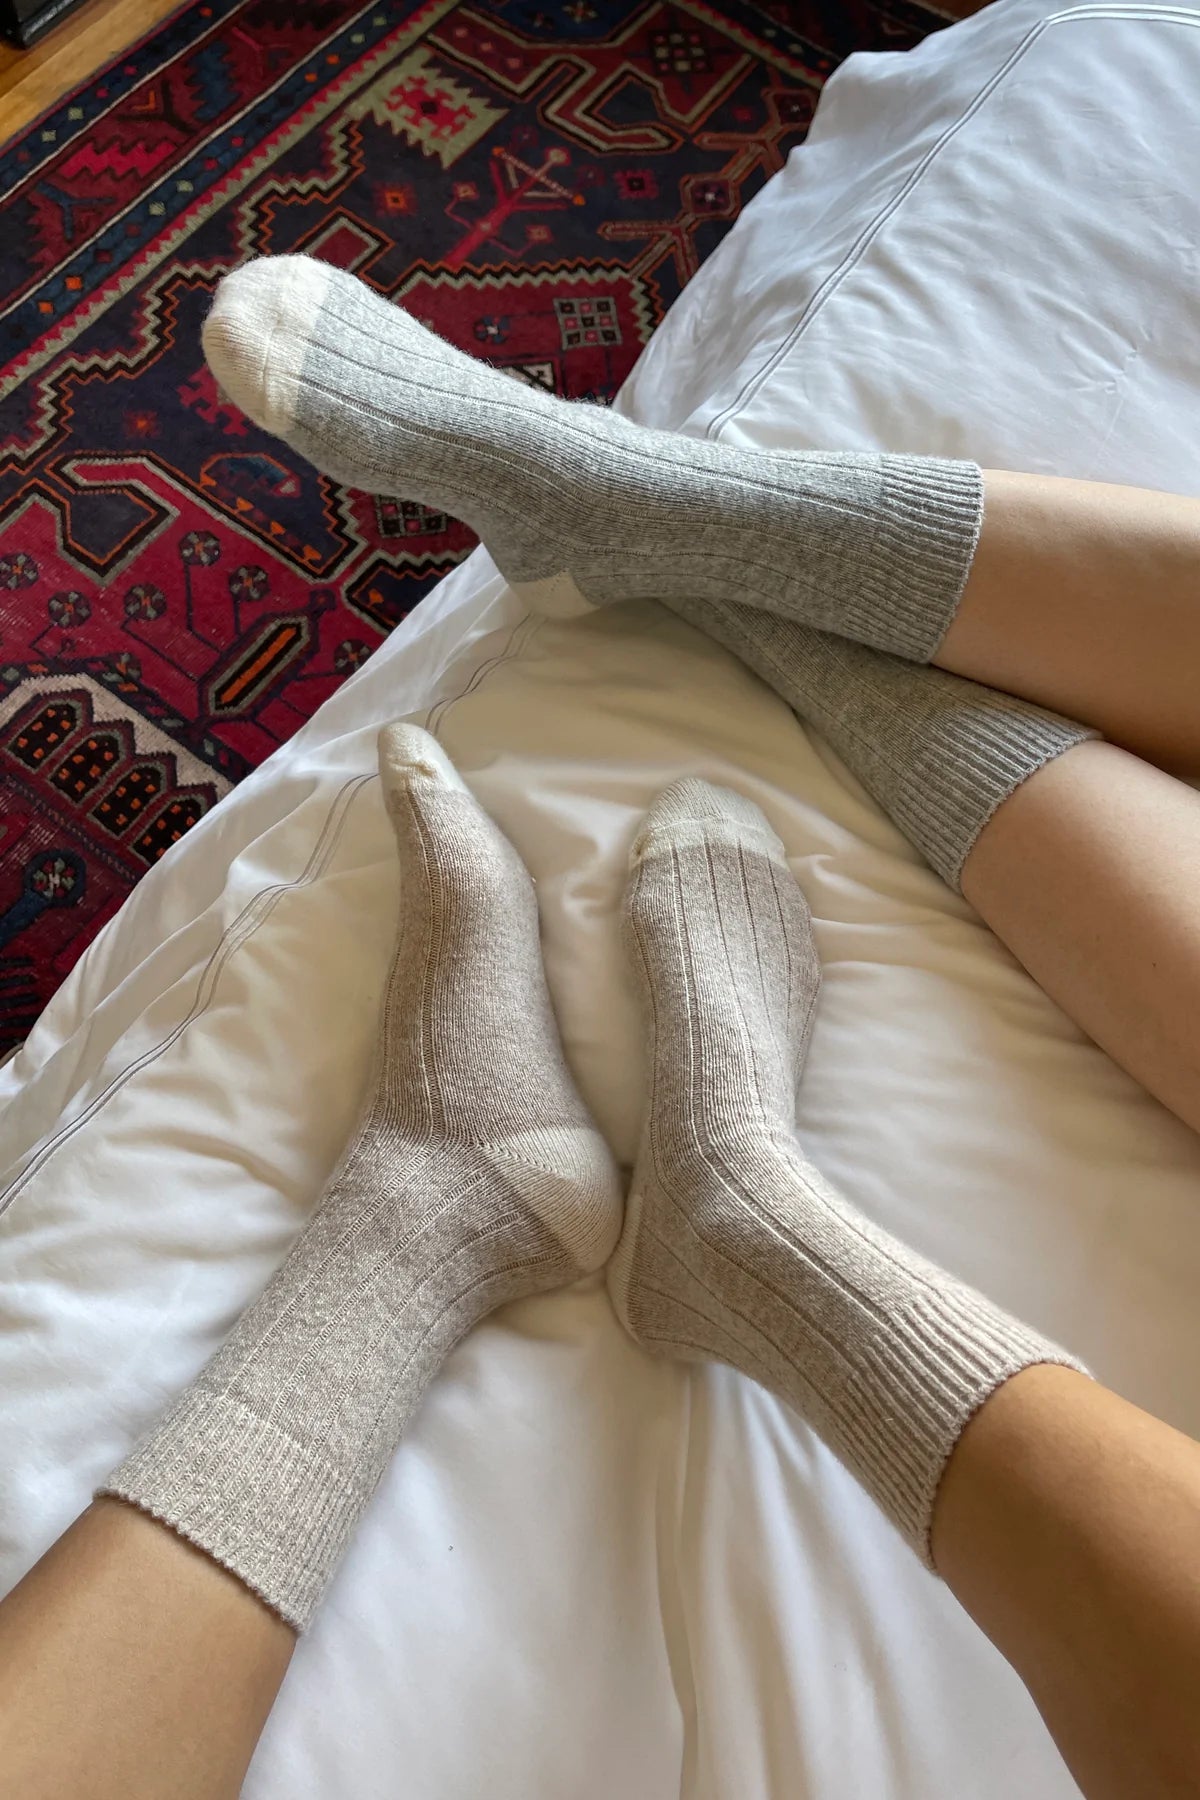 OLBUPS 3 Pairs of Cashmere Socks, Women's Winter Fleece Socks